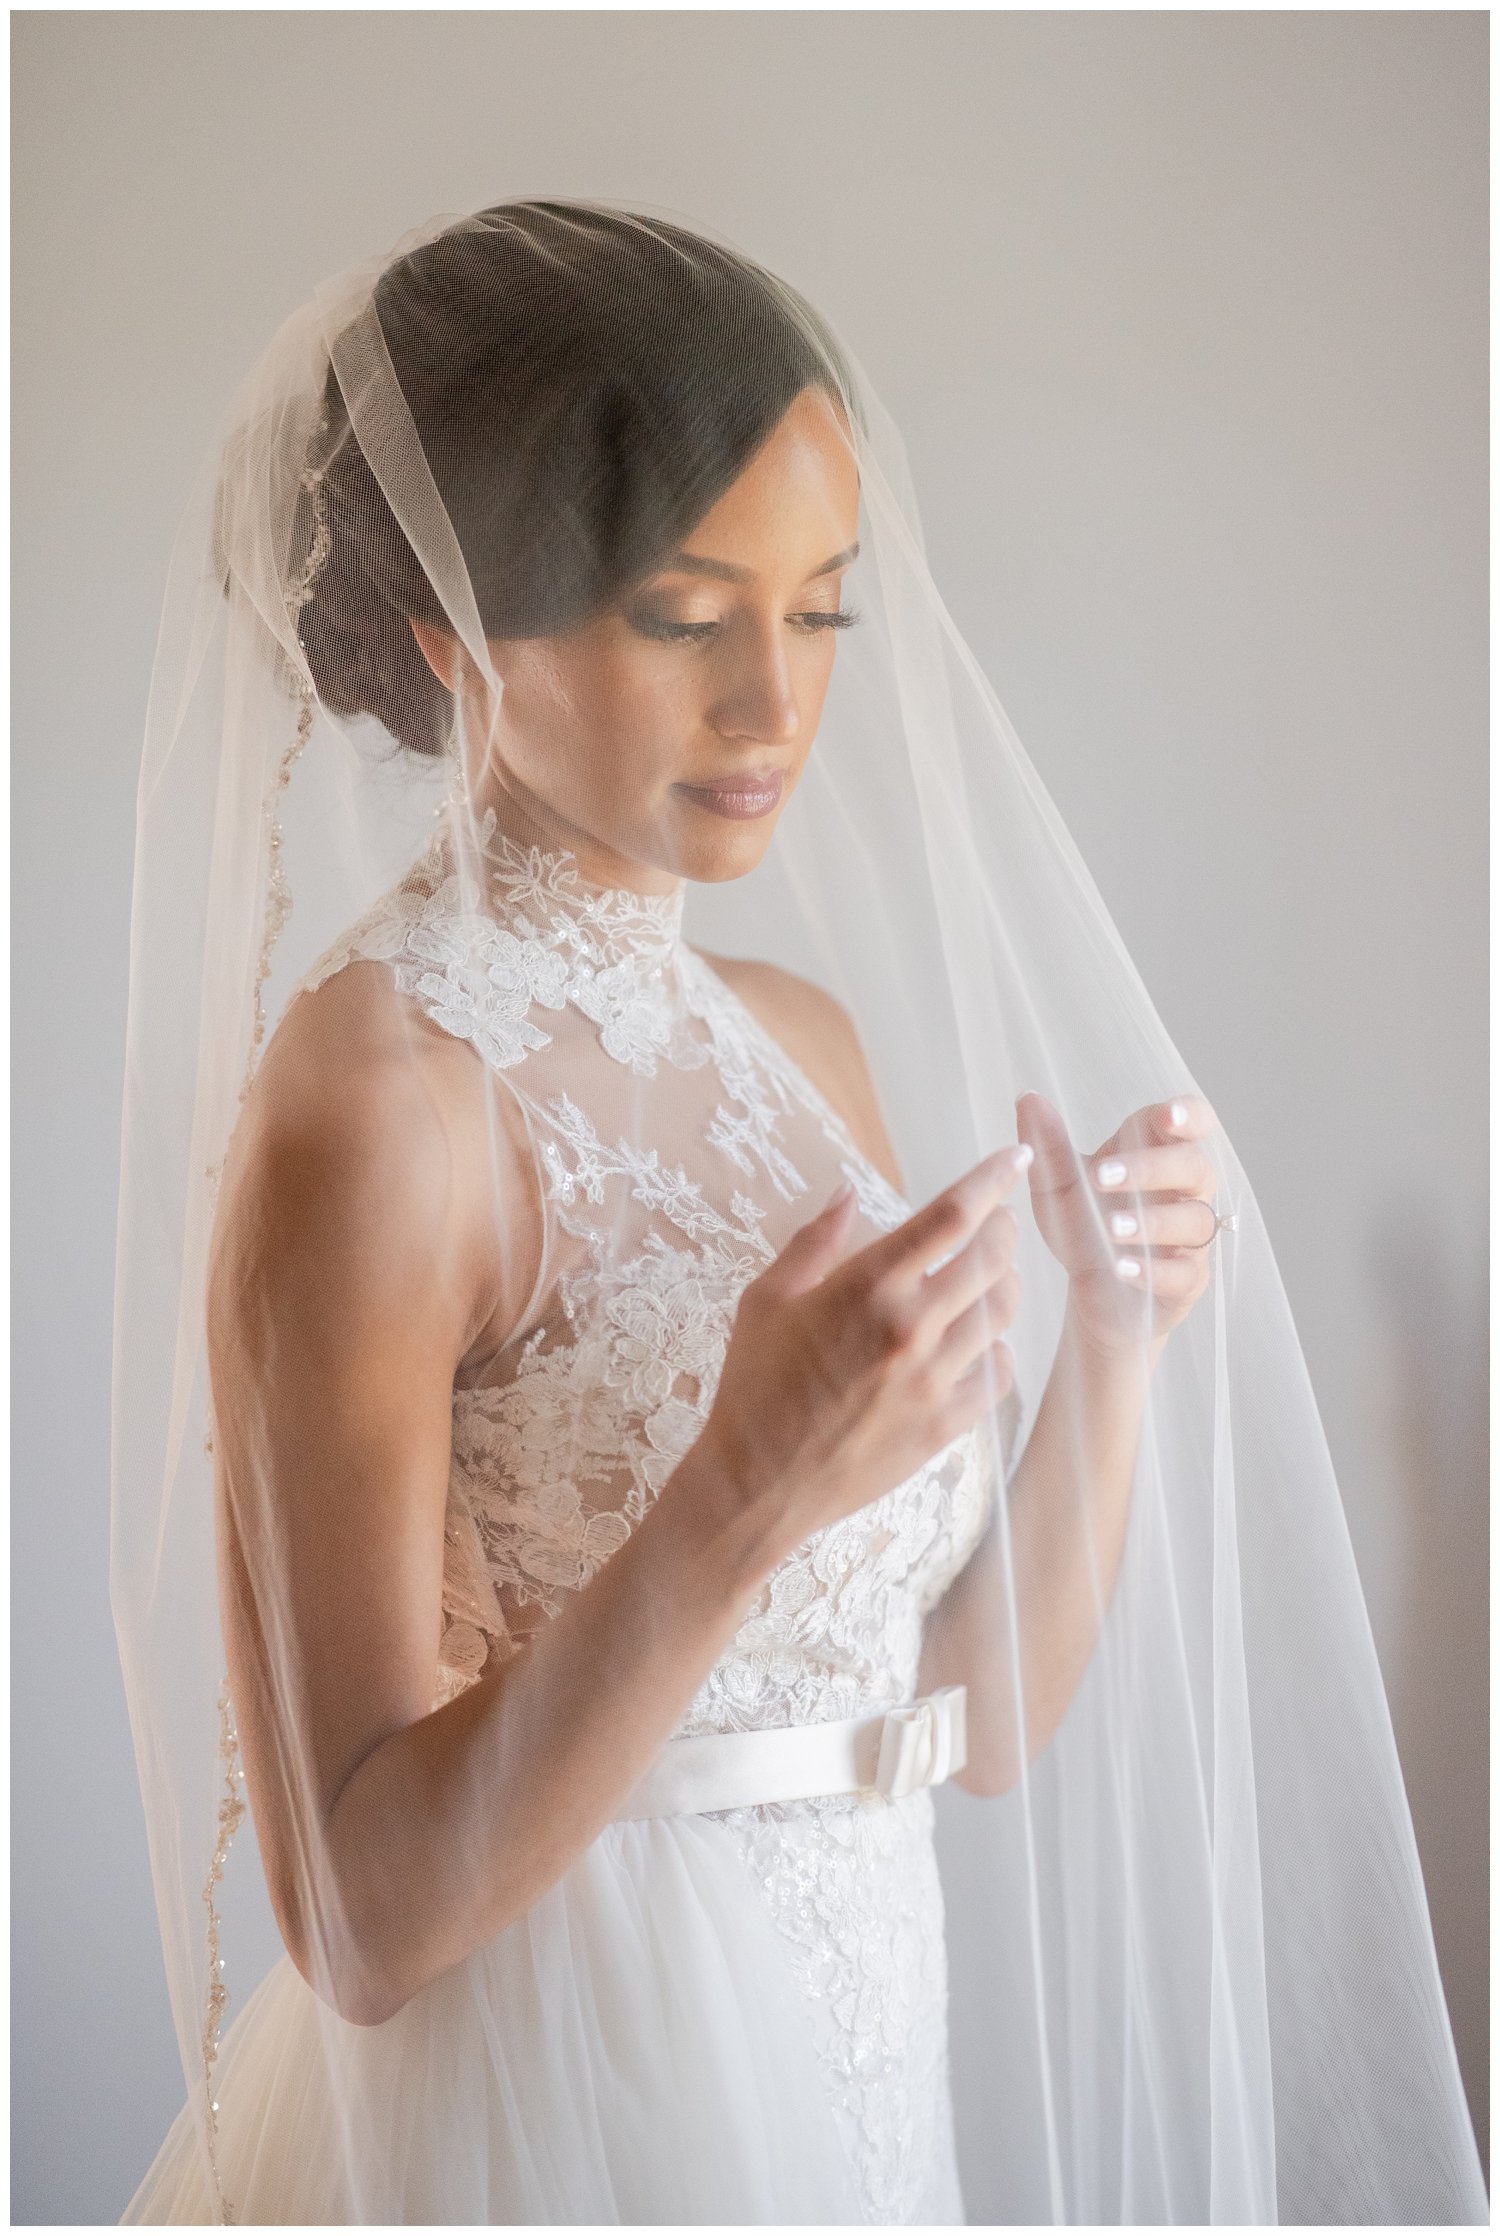 bridal portrait with brides hands under her veil